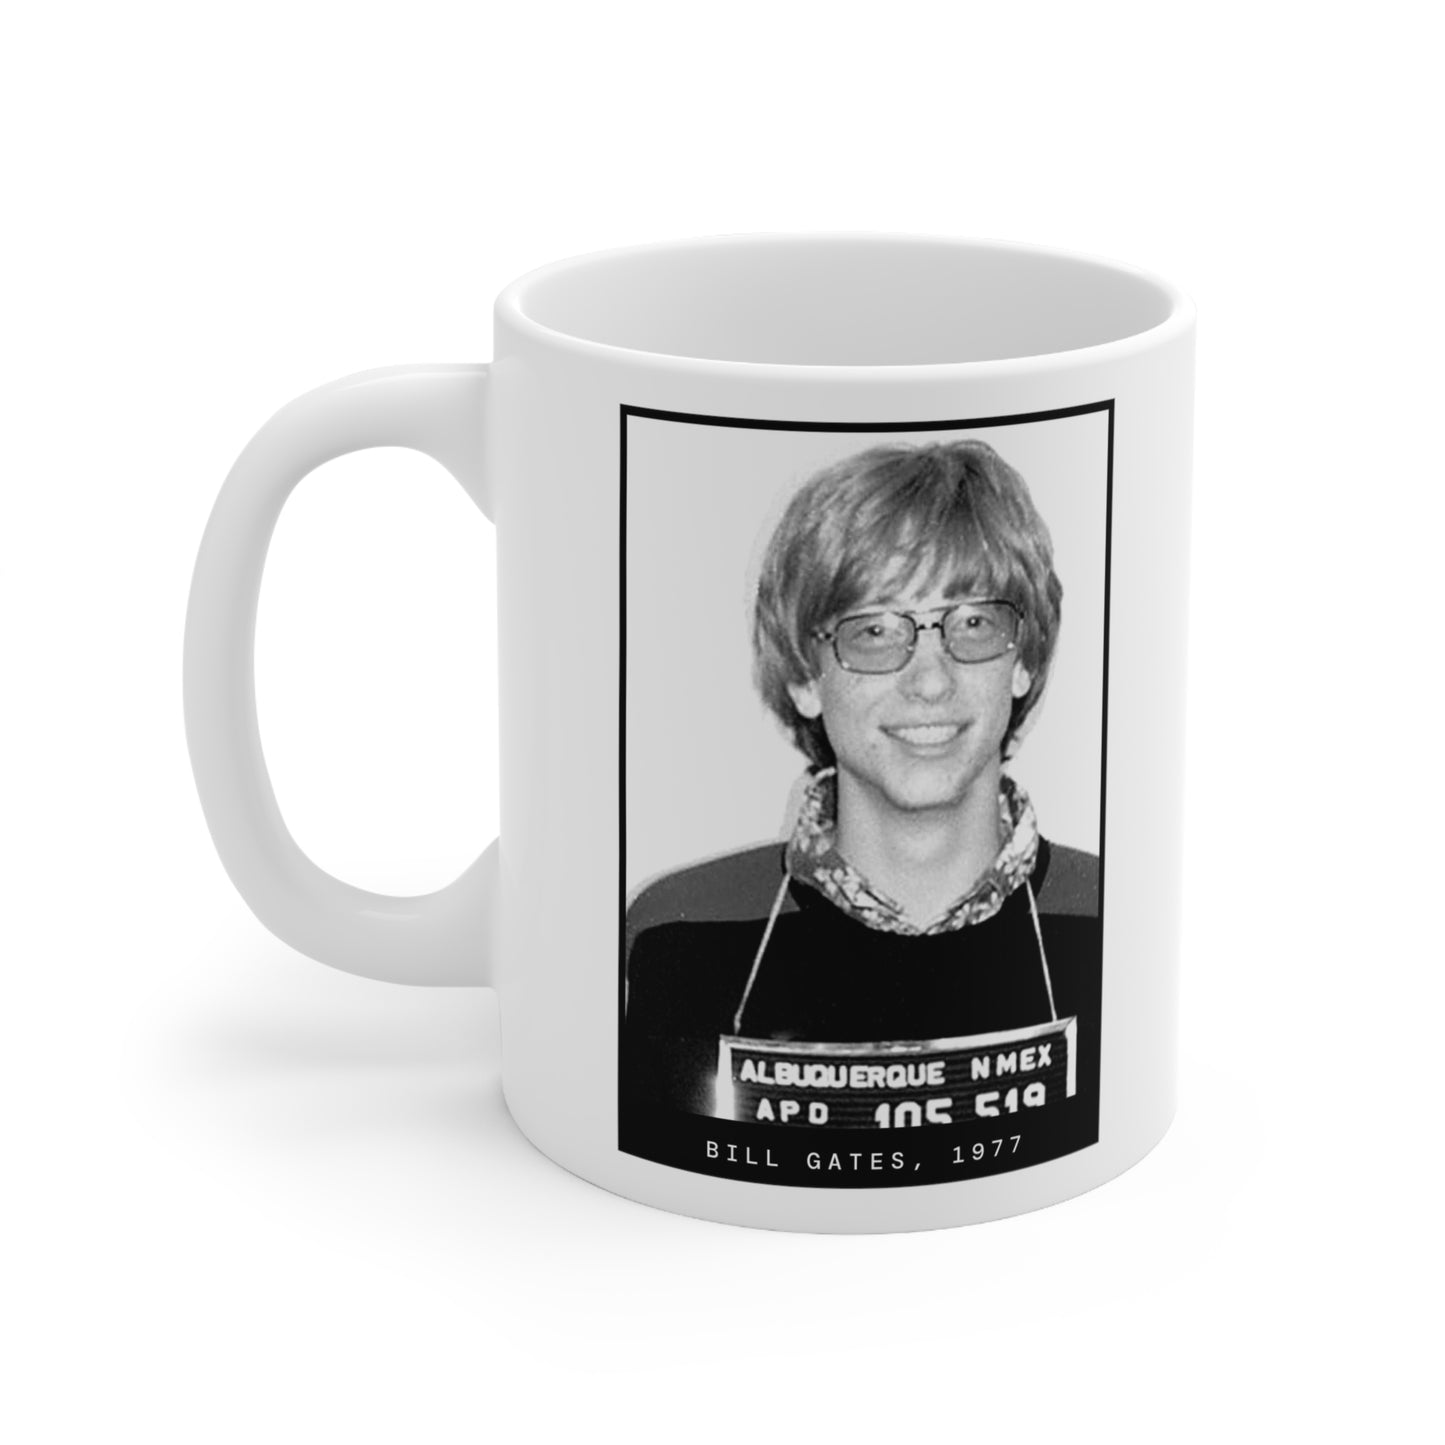 Bill Gates, 1977 Millionaire Mugshot Mug